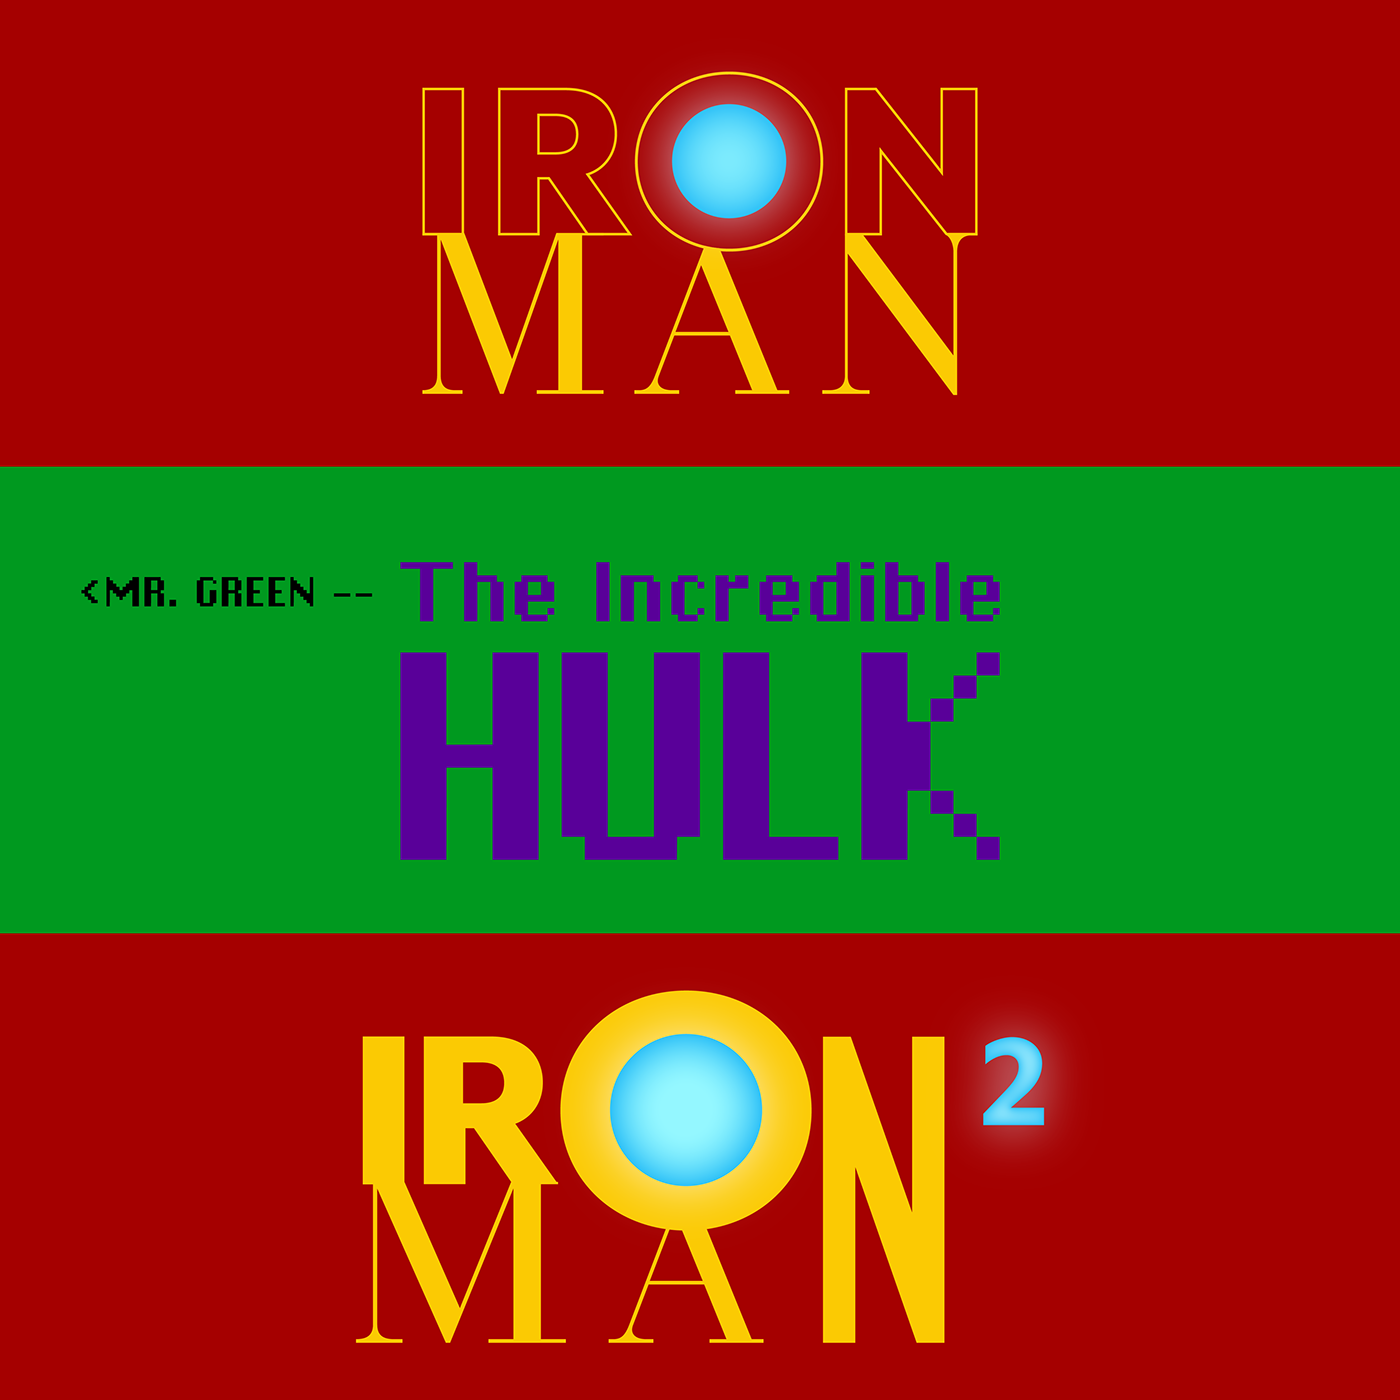 typography design mcu iron man Hulk disney marvel SuperHero